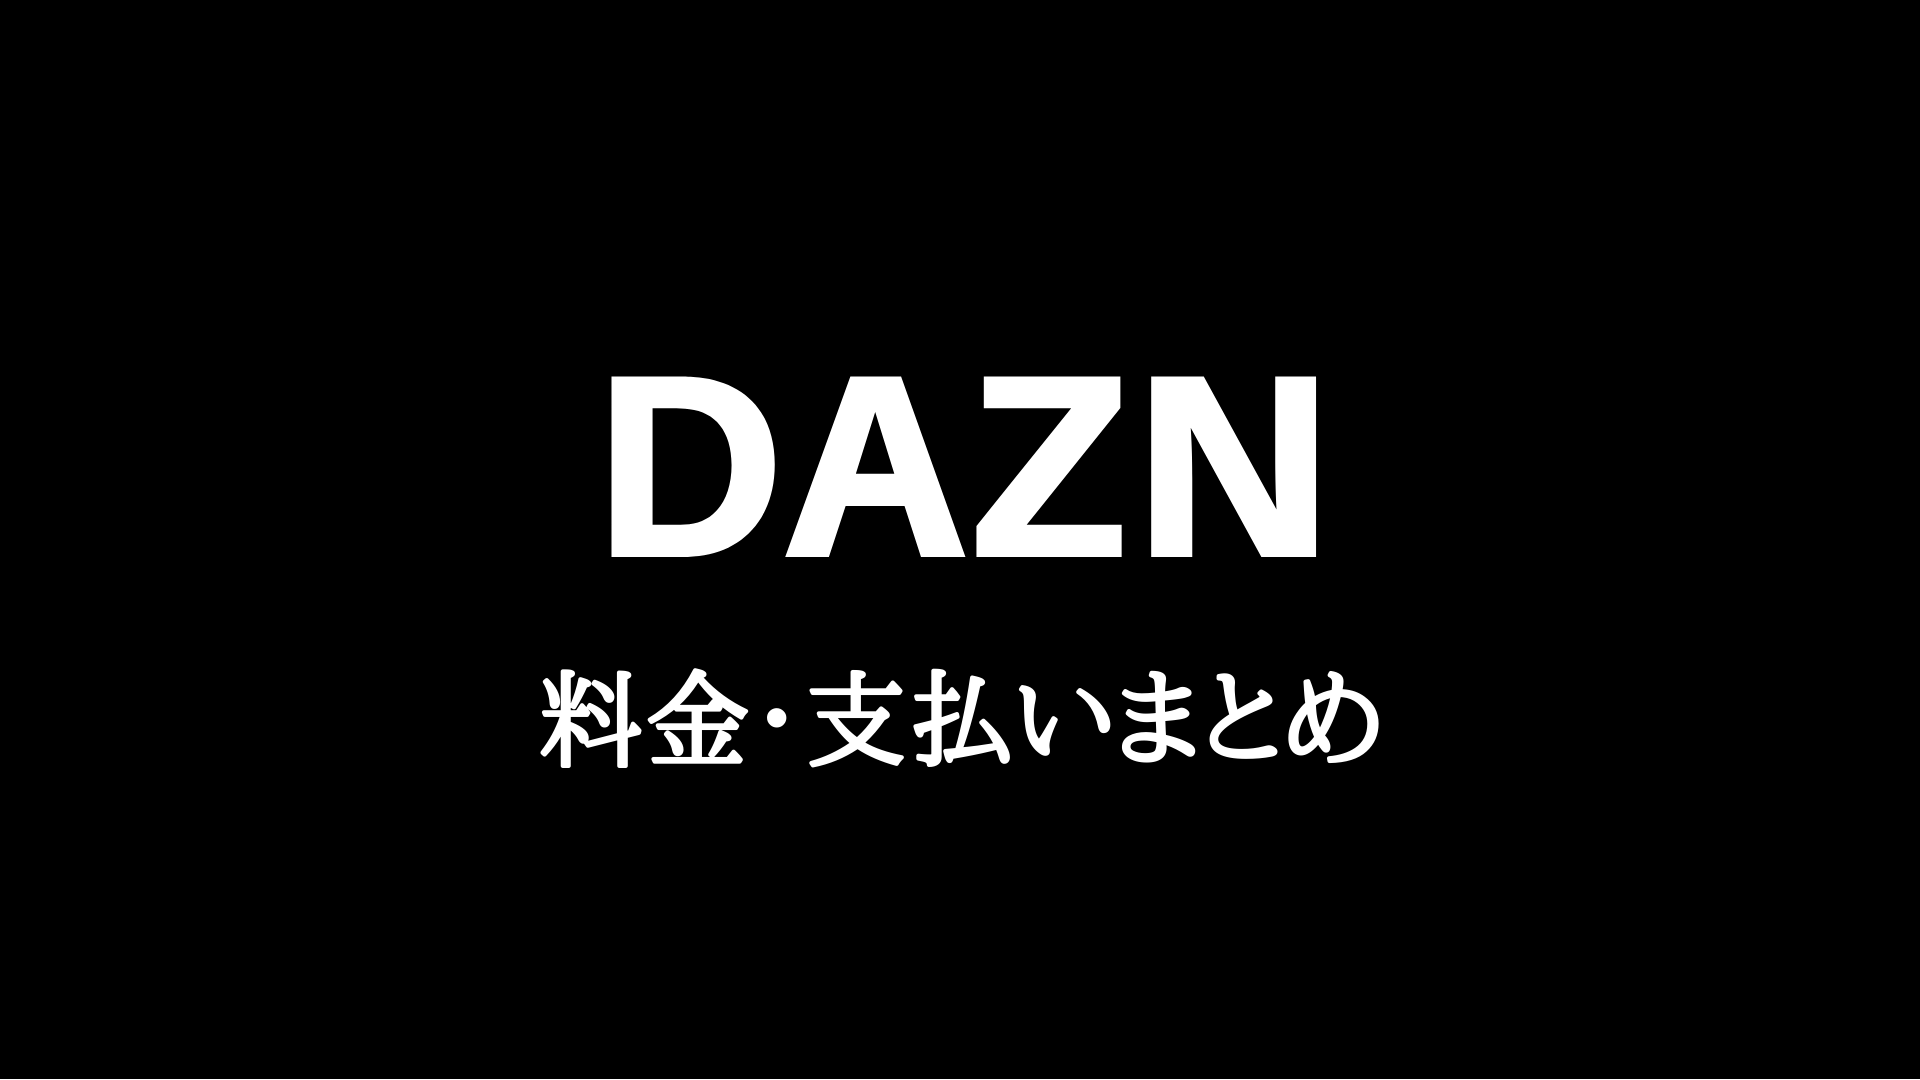 Dazn ダゾーン の月額料金 支払い方法をわかりやすく解説 21最新版 寝タラボ